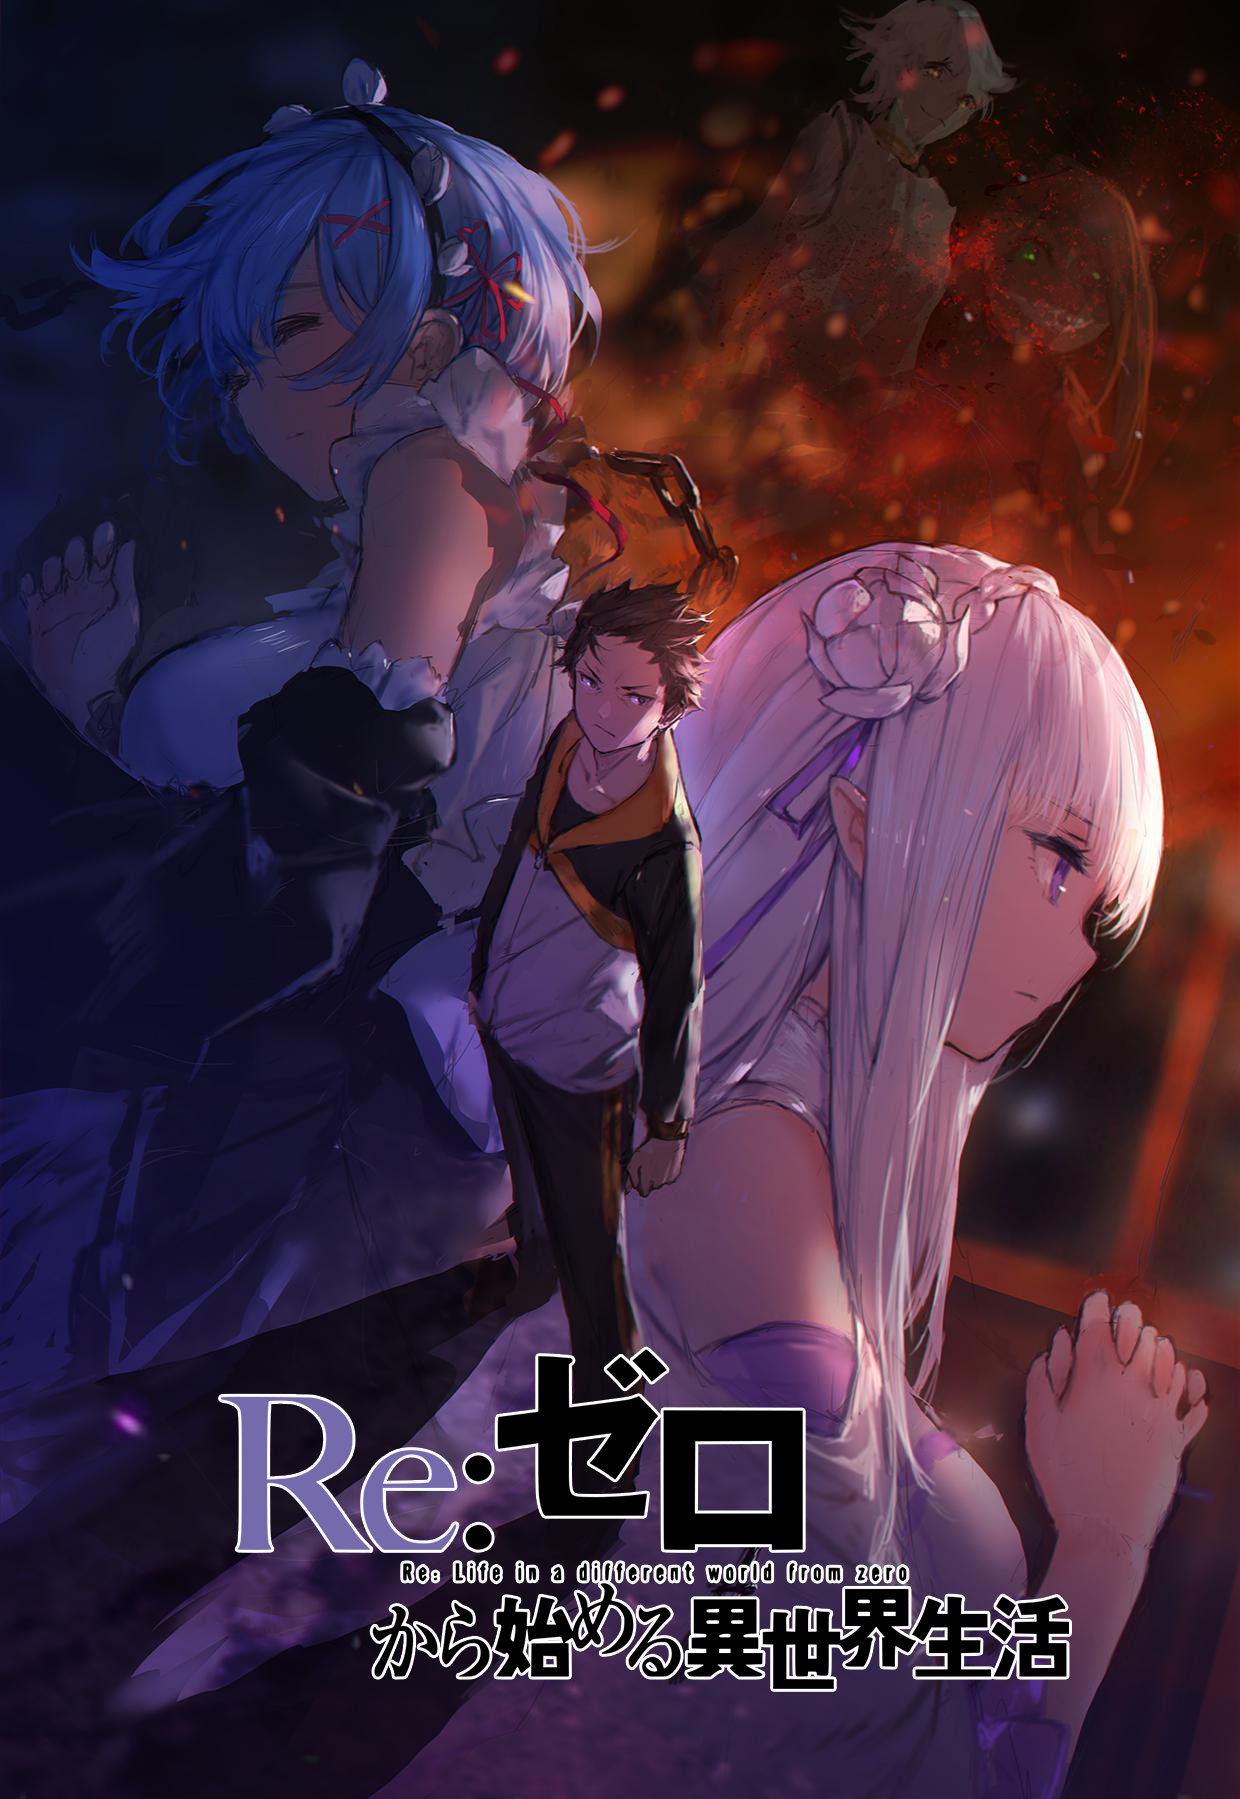 Season three of Re : Zero officially announced ##rezero##netflix##anim